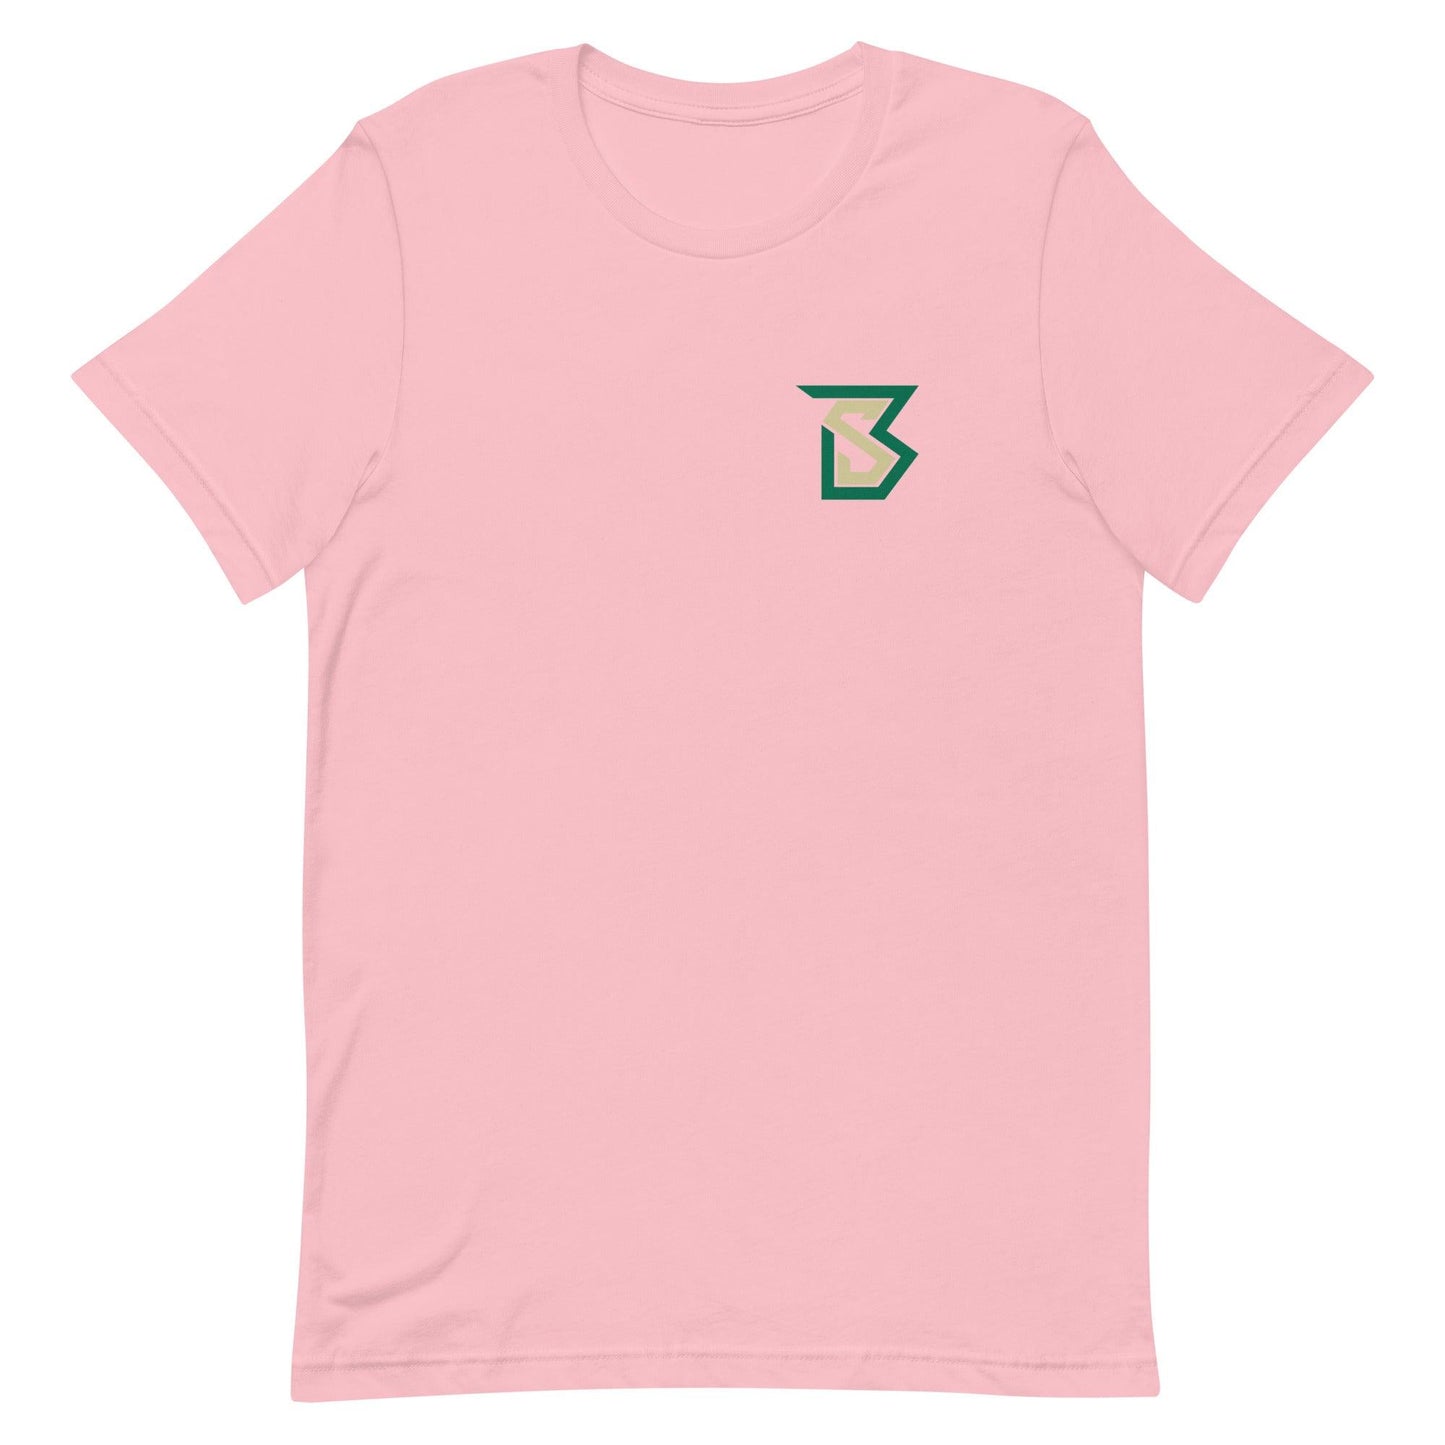 Bentlee Sanders "Essential" t-shirt - Fan Arch